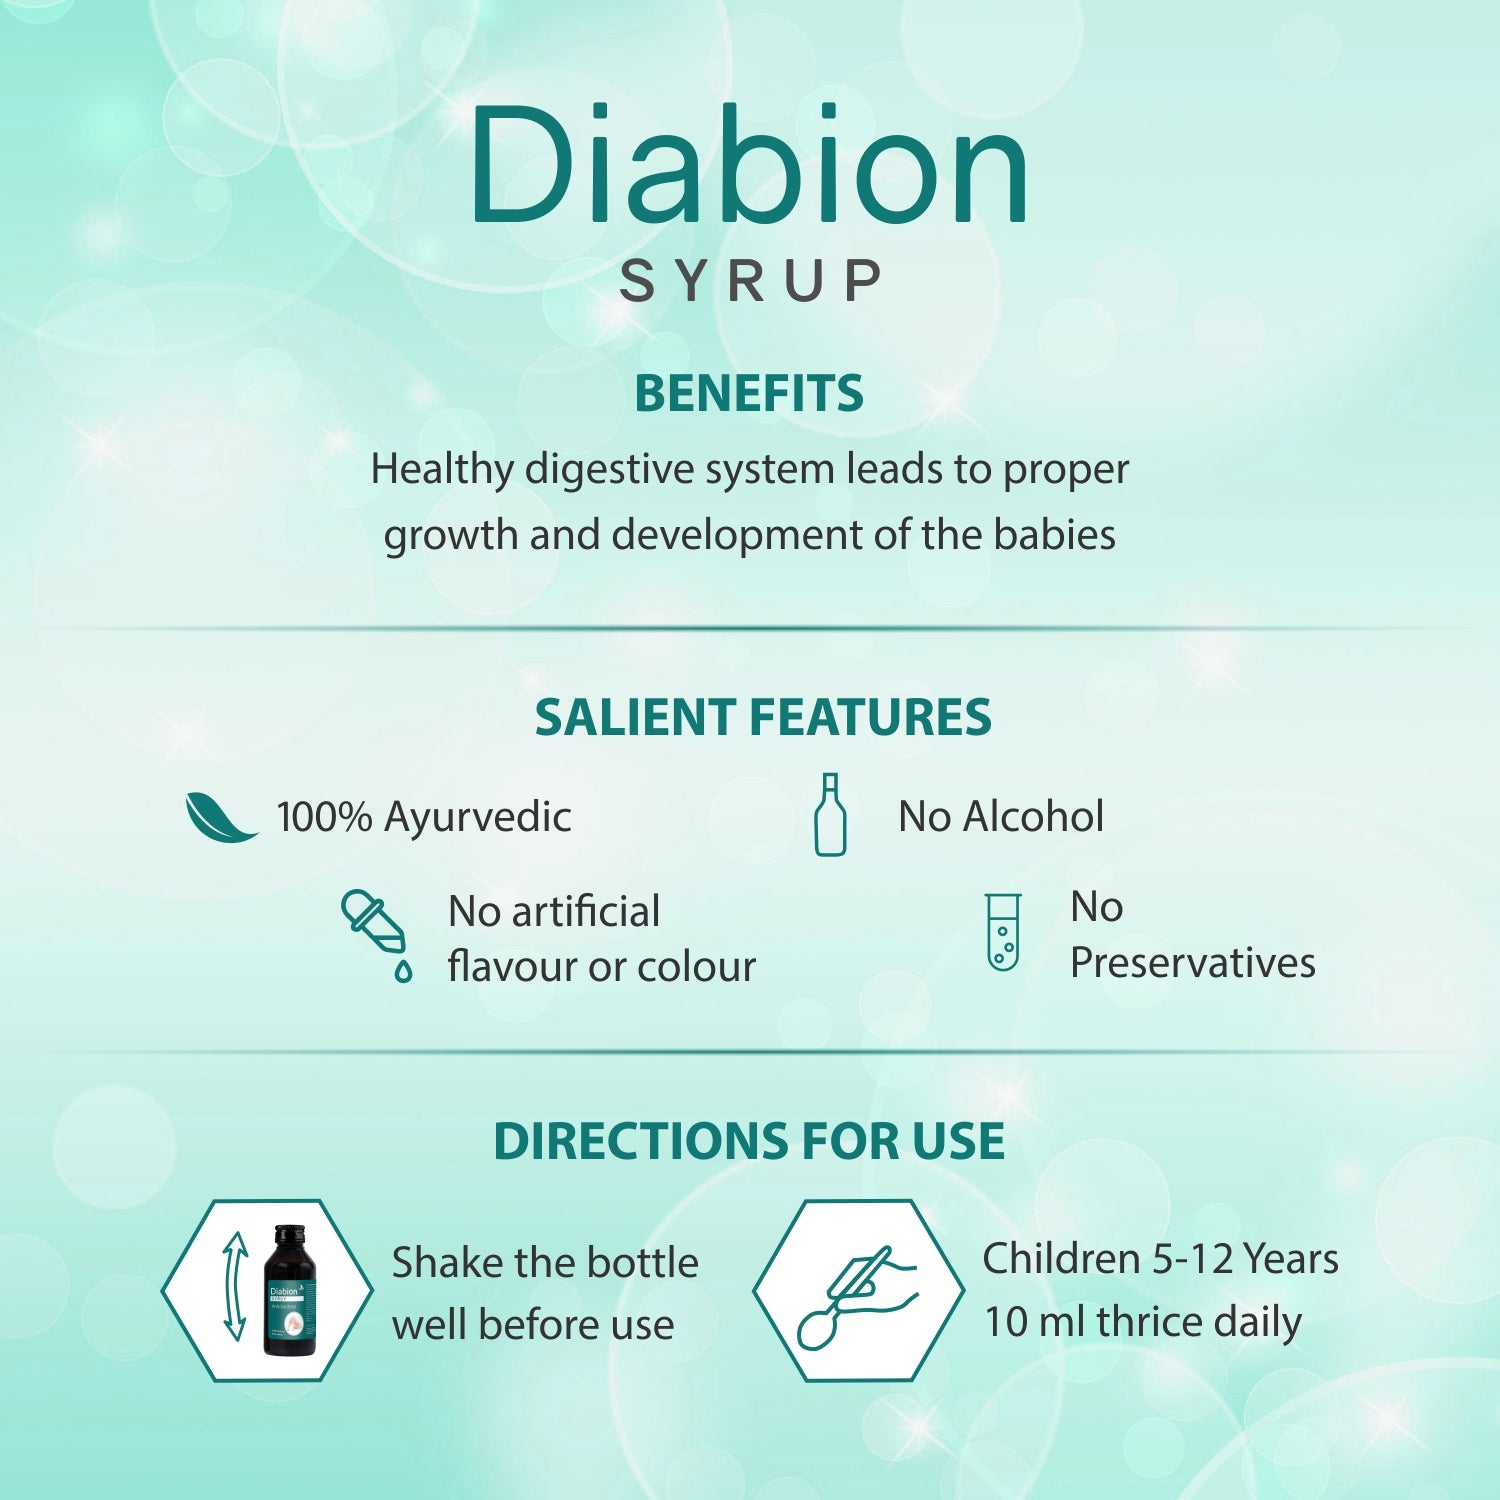 Diabion Syrup (100 ml)